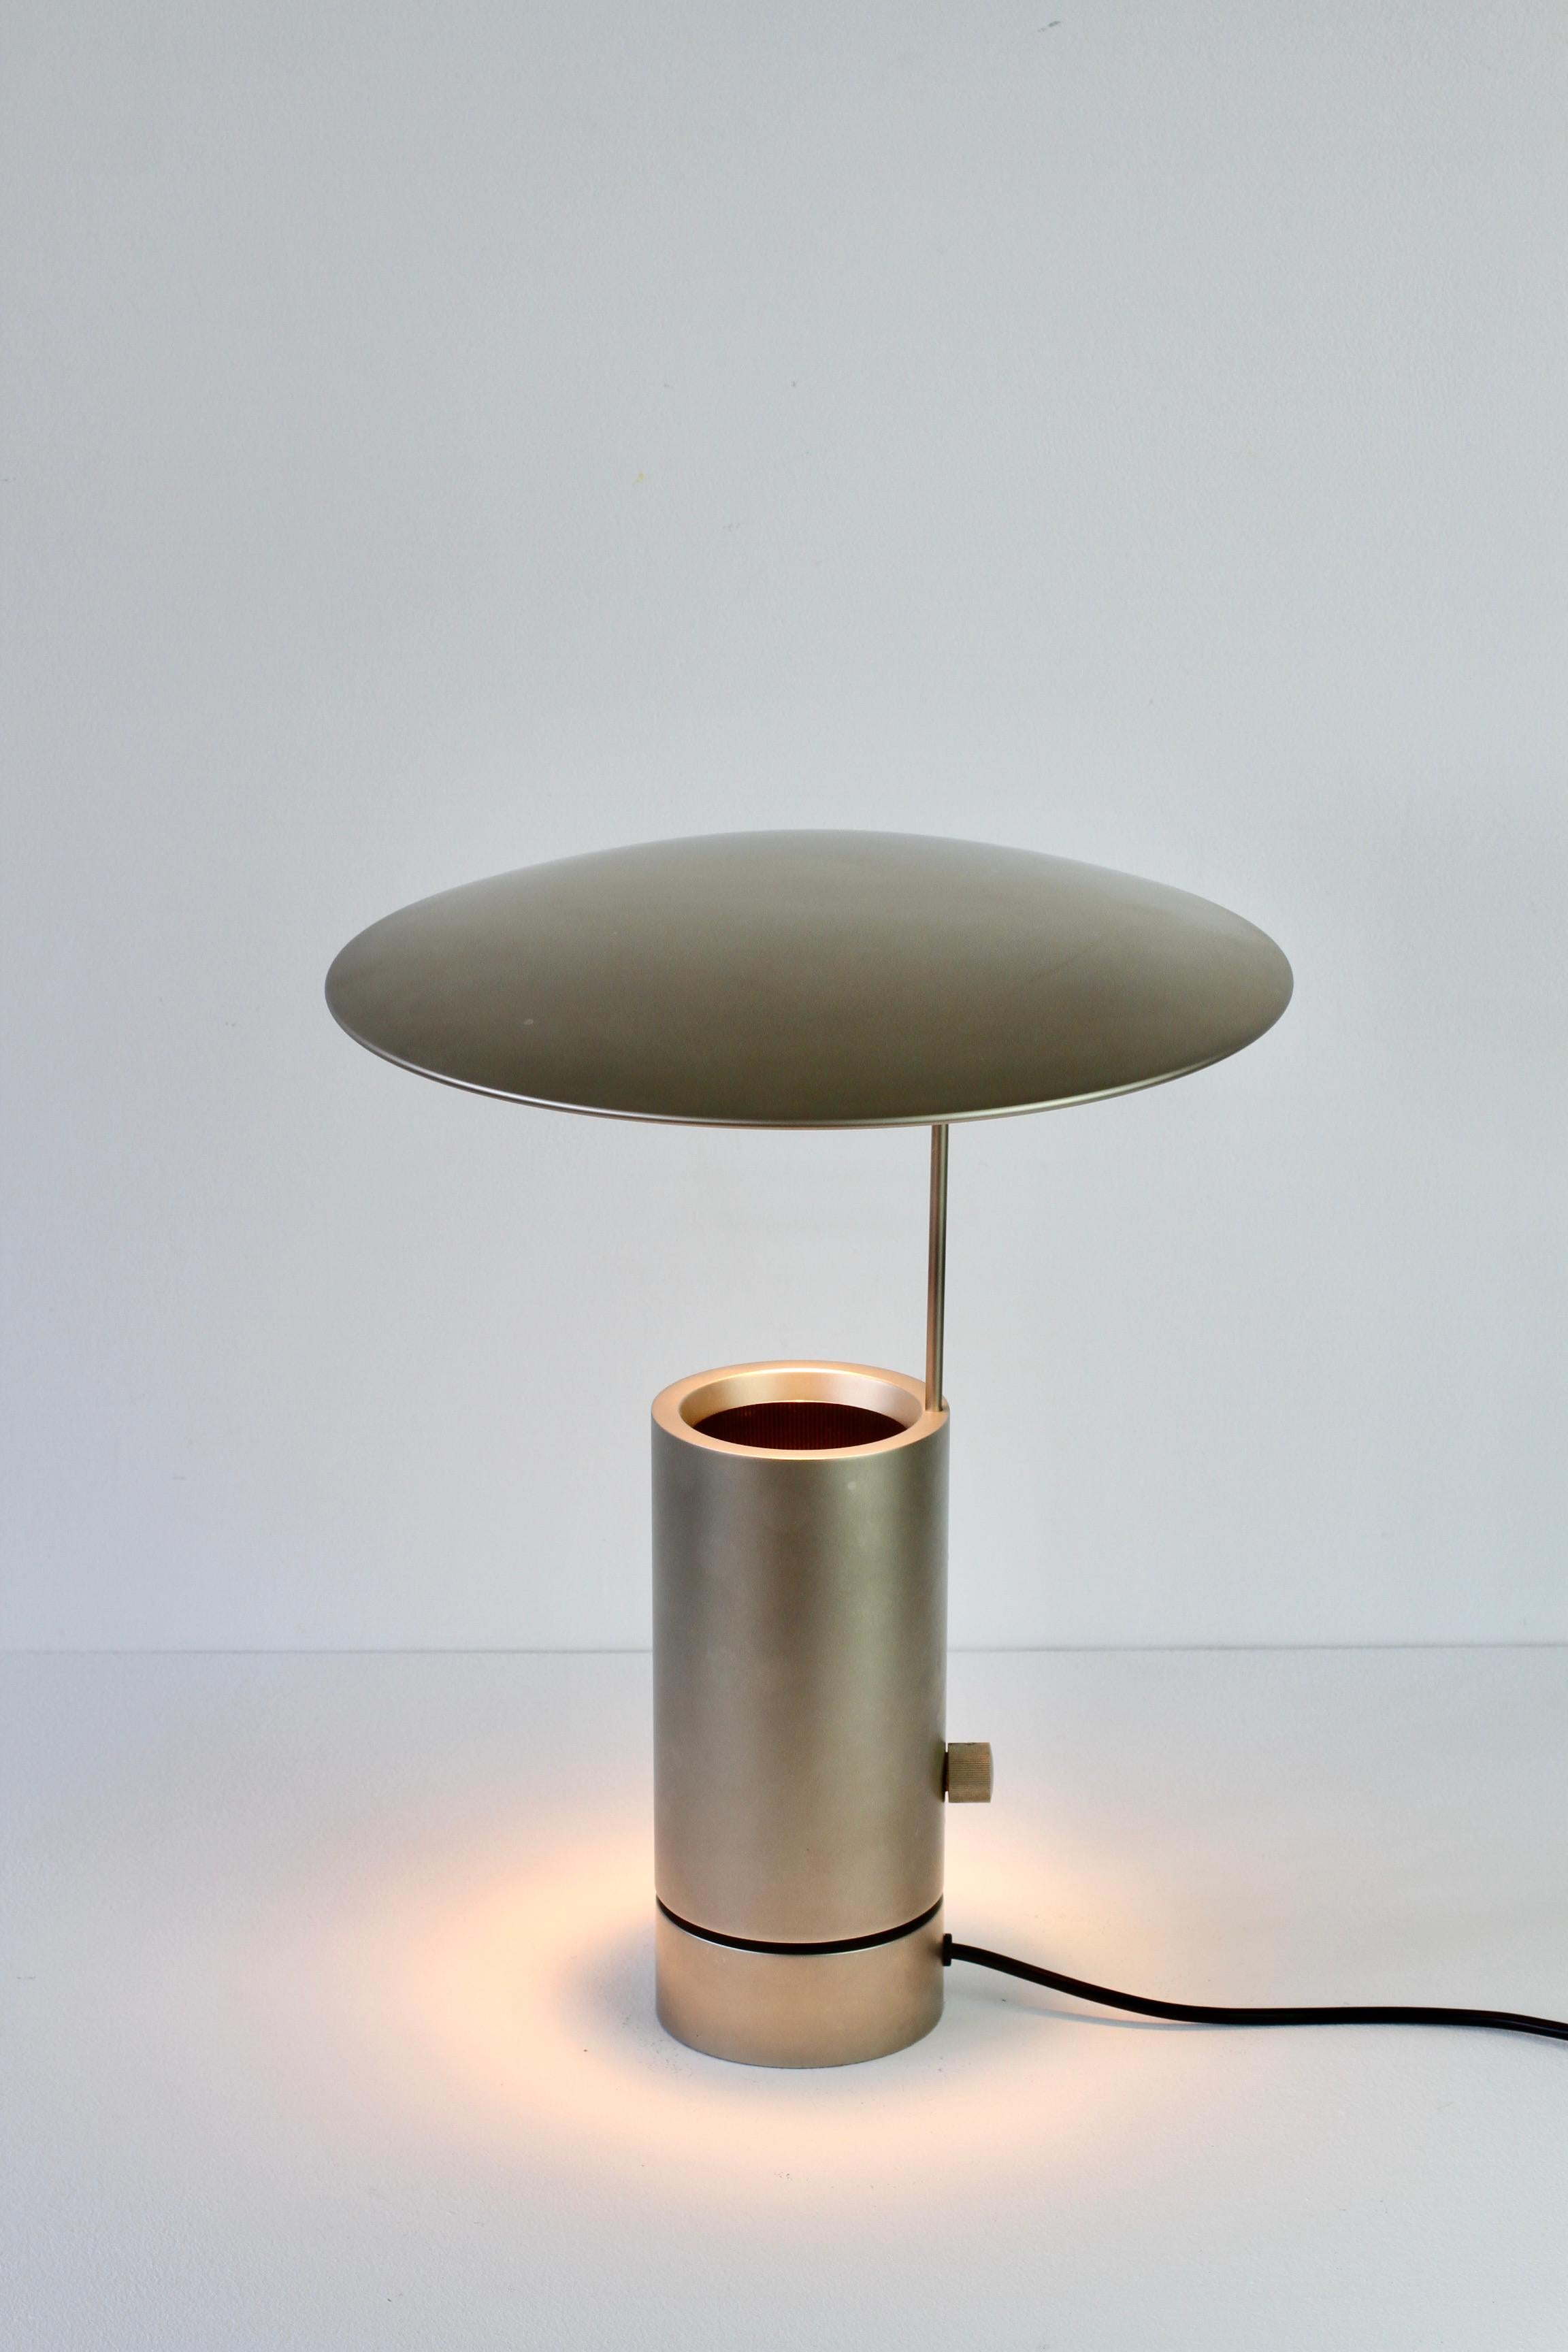 Florian Schulz Rare 'TOS' Vintage Modernist Brushed Satin Nickel Table Lamp For Sale 7